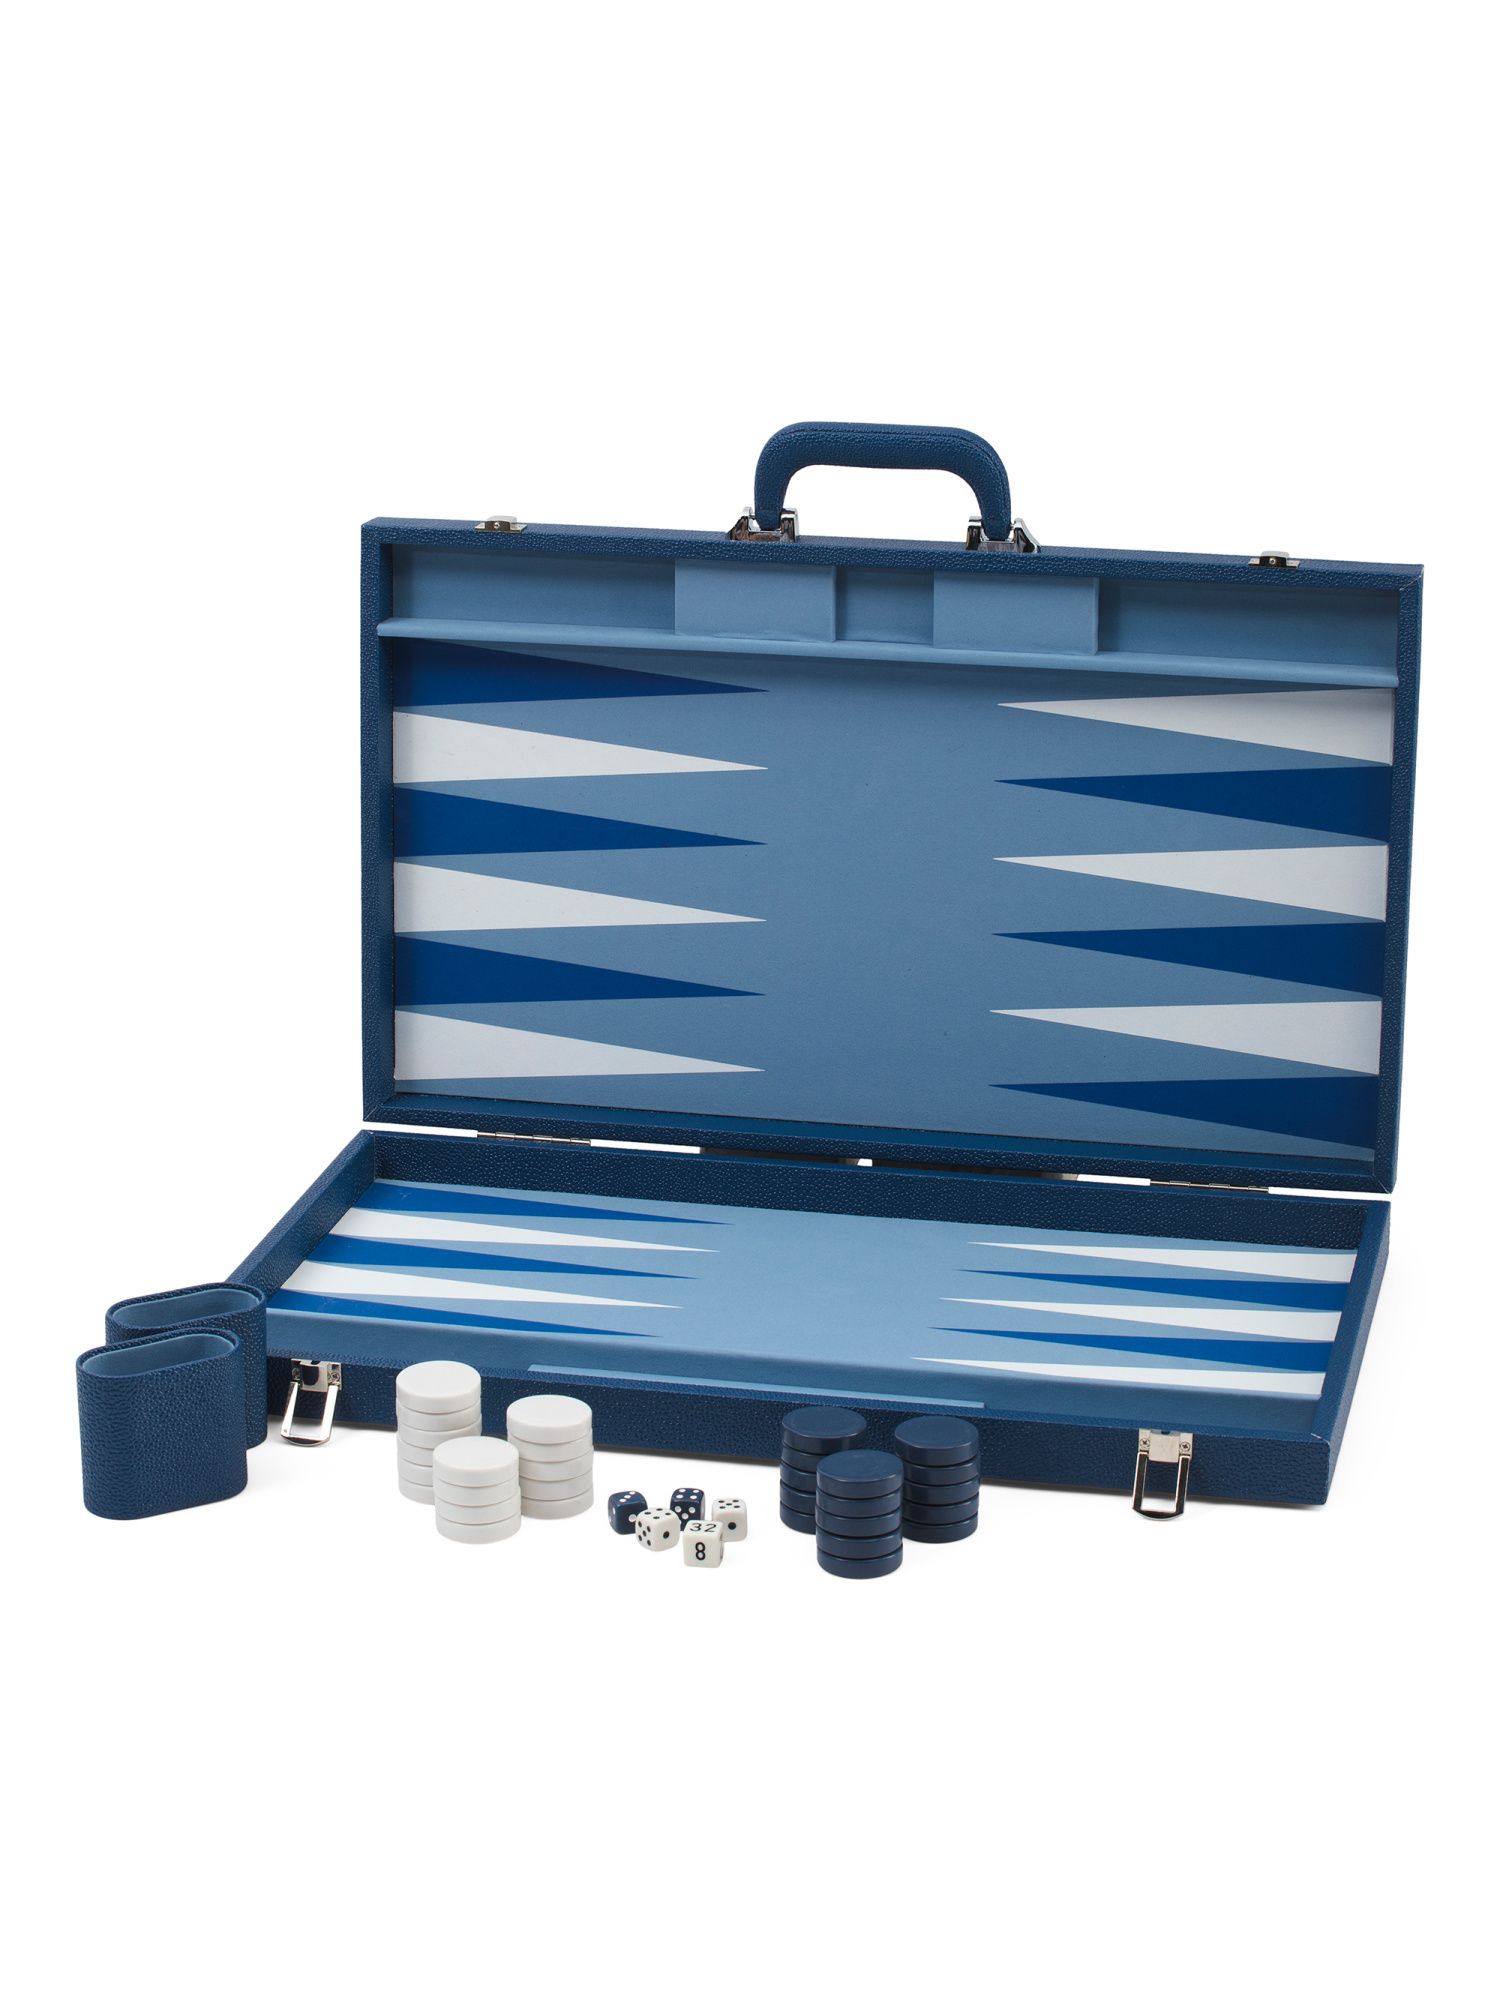 Onyx Backgammon Set With Faux Leather Case | TJ Maxx